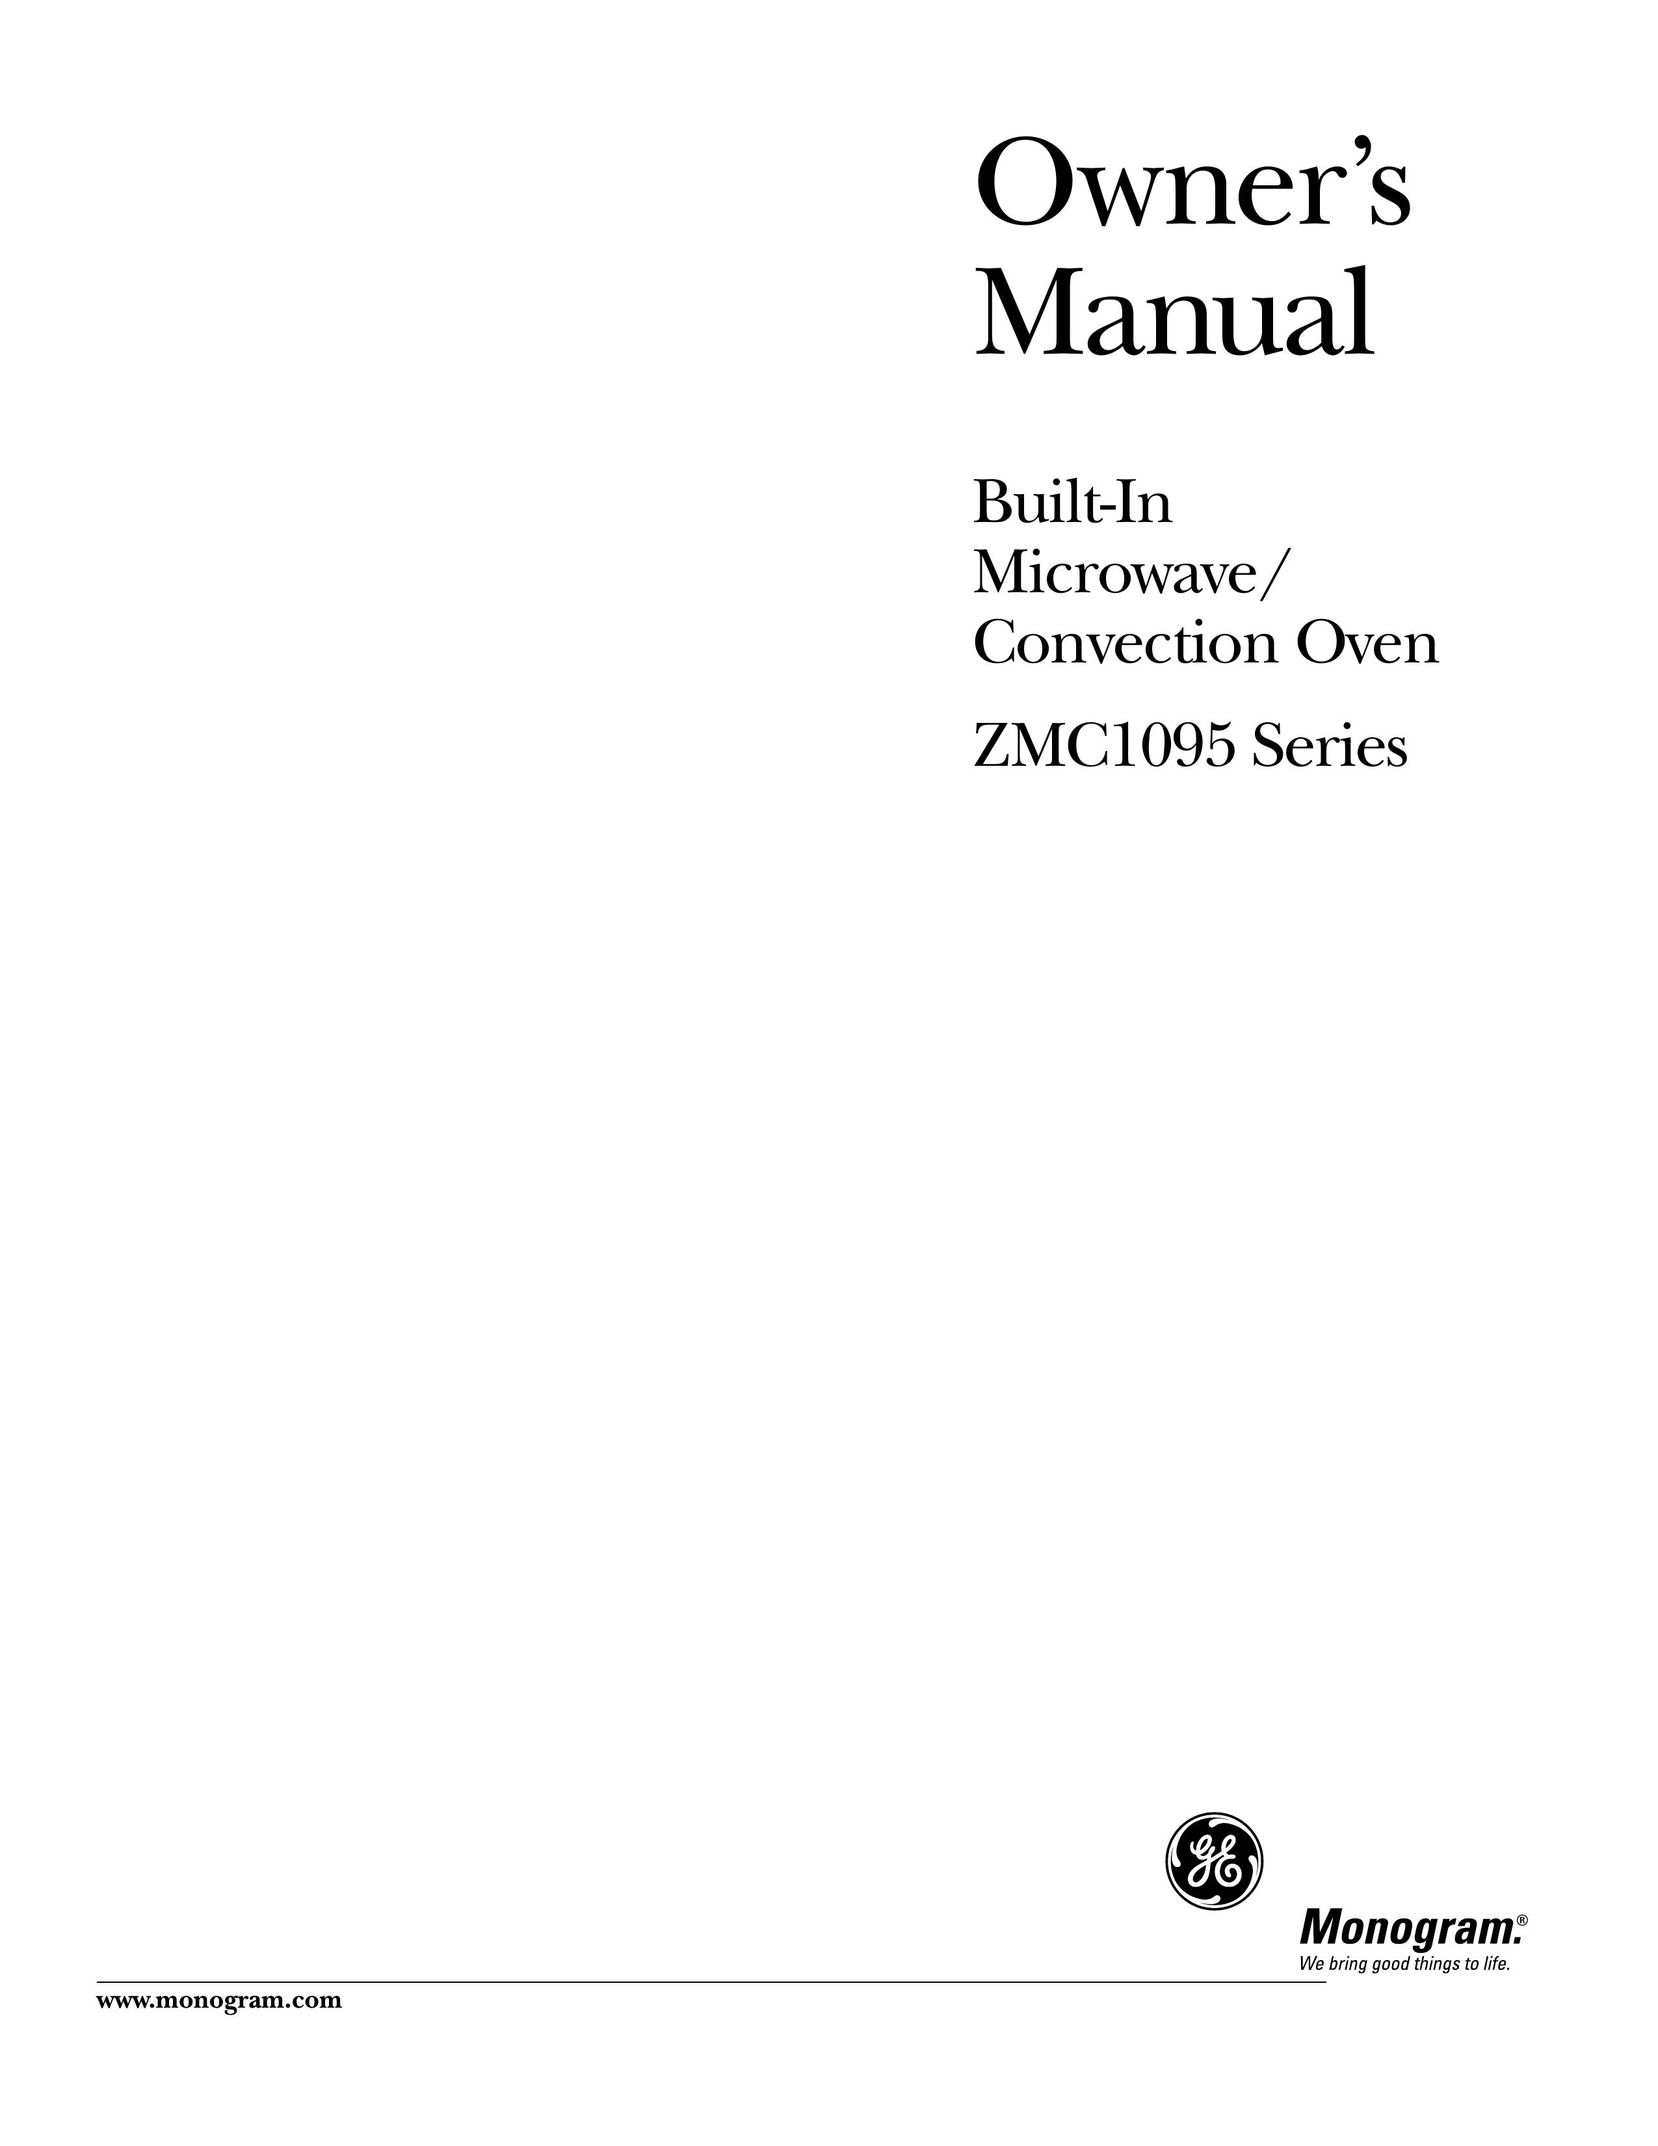 GE Monogram ZMC1095 Microwave Oven User Manual